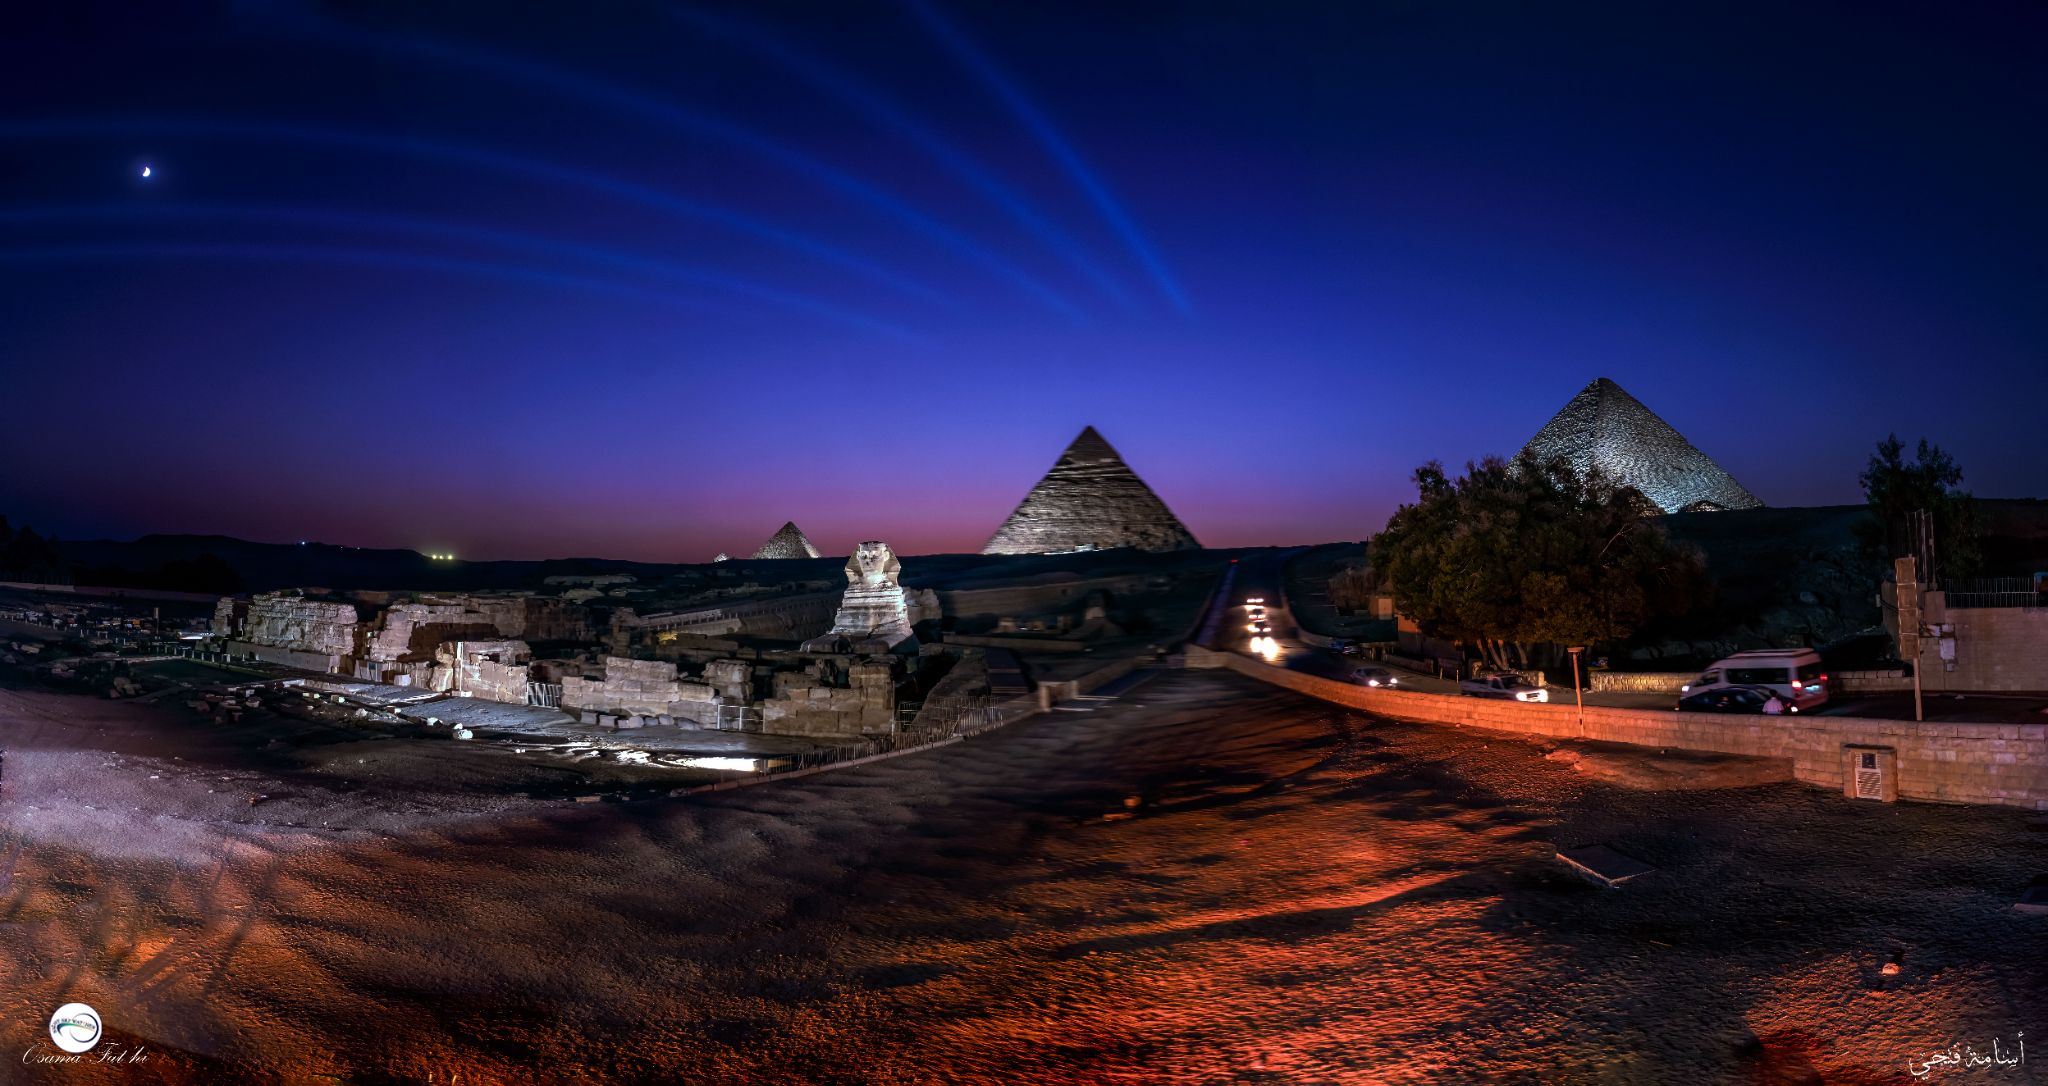 Community photo by Osama Fathi | The pyramids, Giza